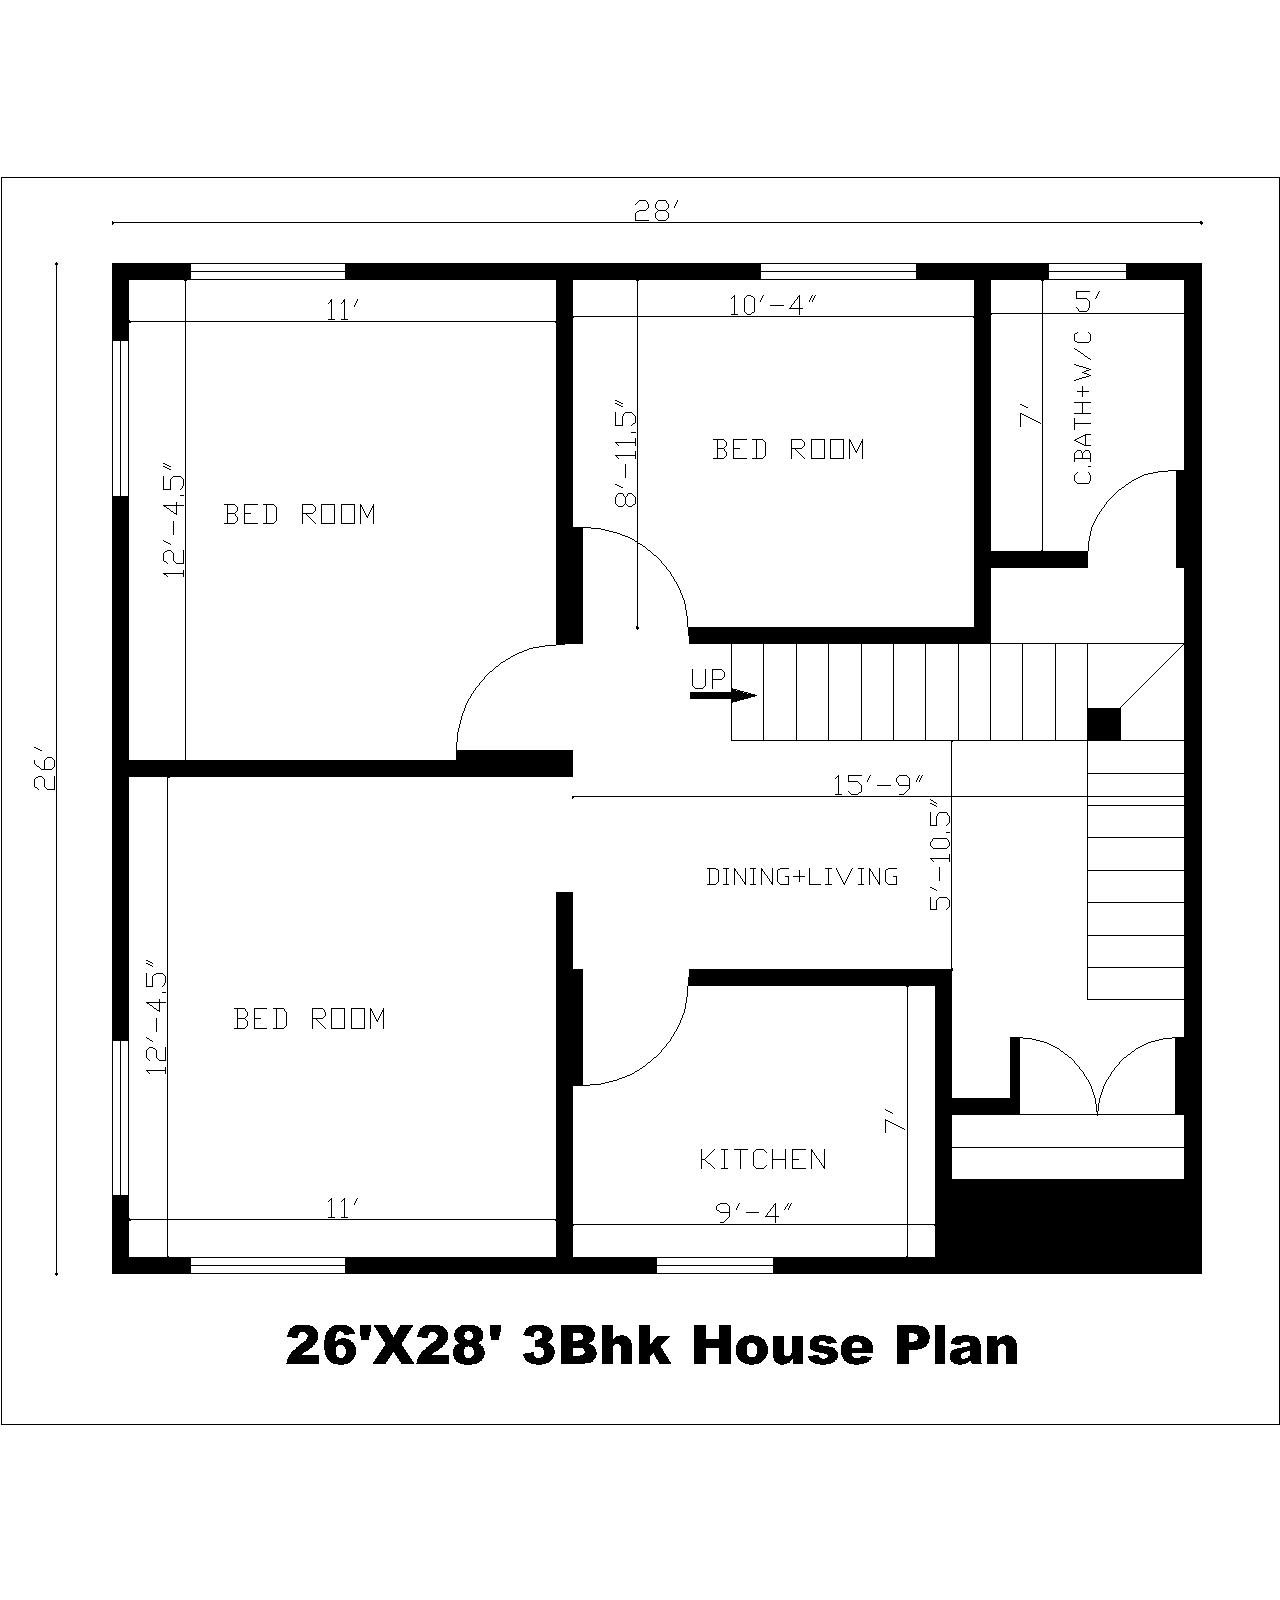 26'X28' 3Bhk House Plan